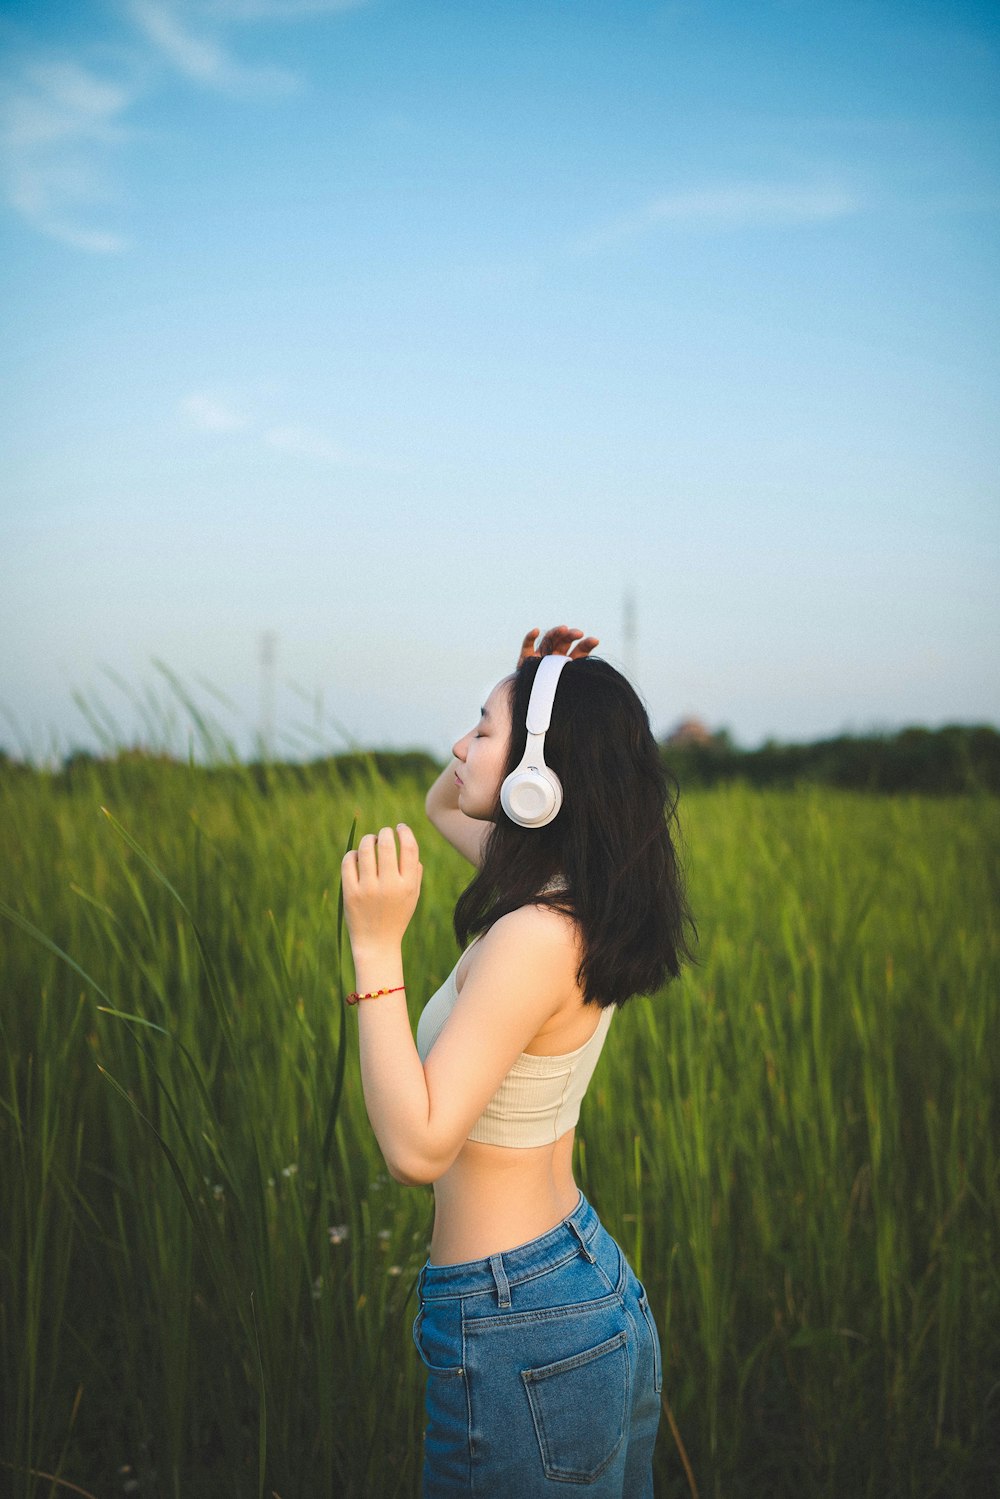 a woman wearing headphones standing in a field